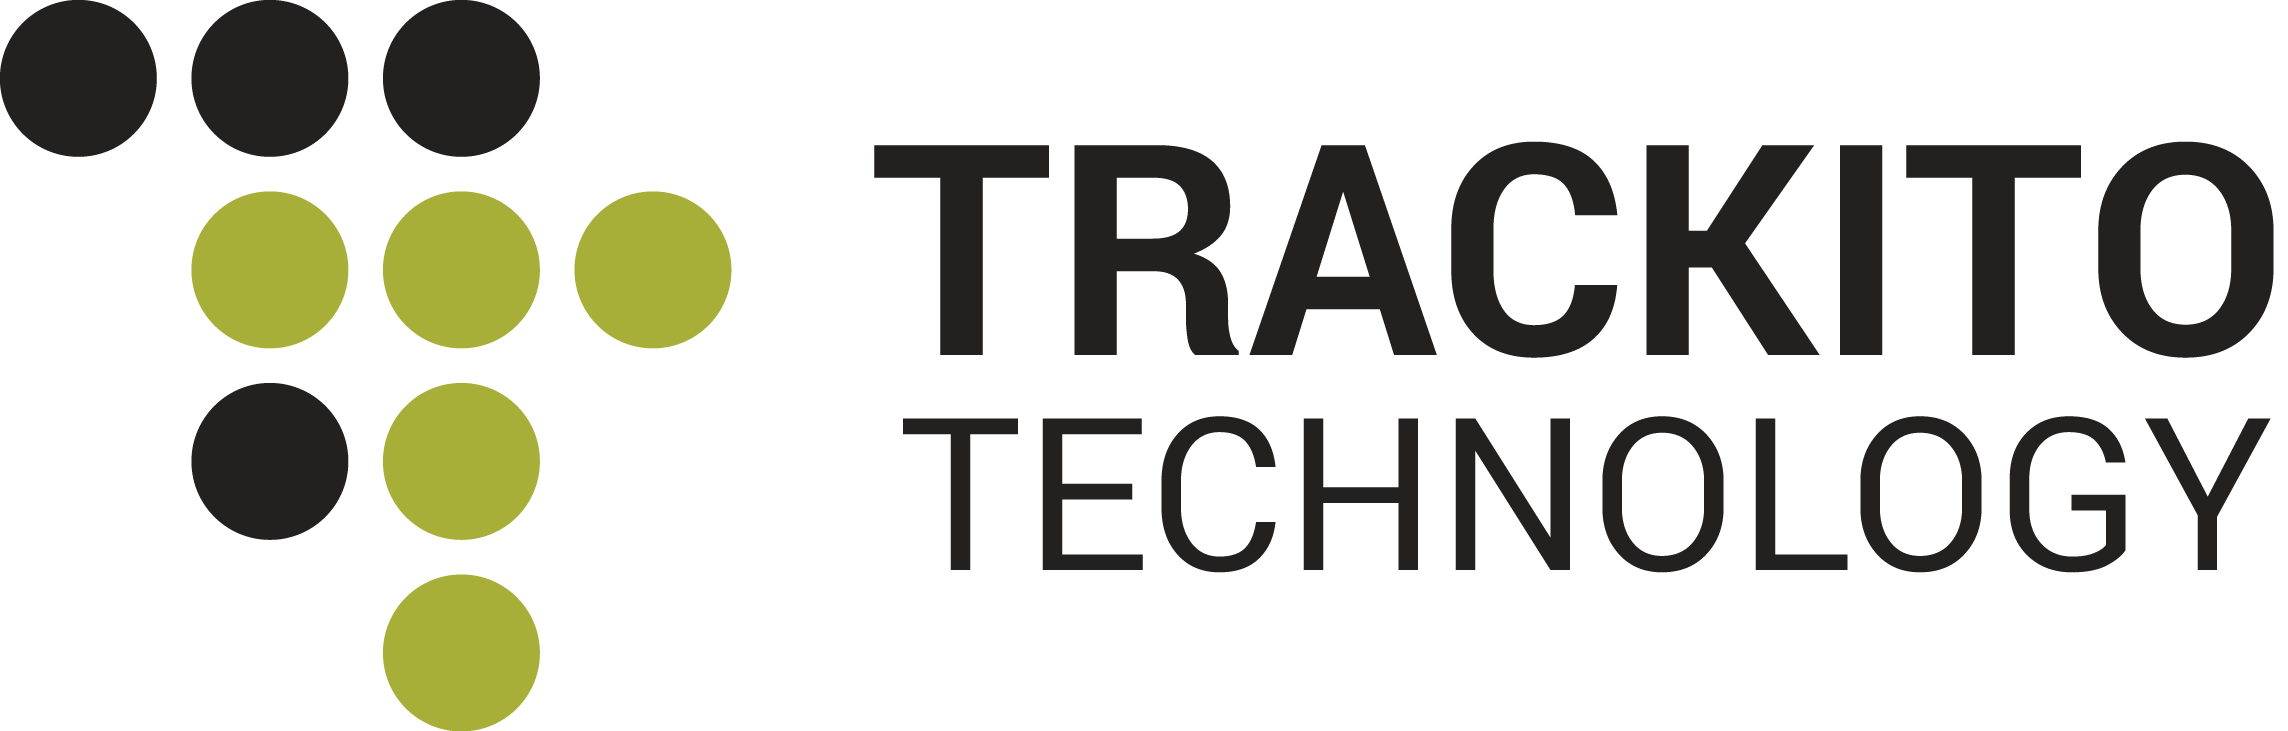 Trackito Technology Czech Republic, s.r.o. & Trackito Technology Ltd. :: Trackito Technology E-shop